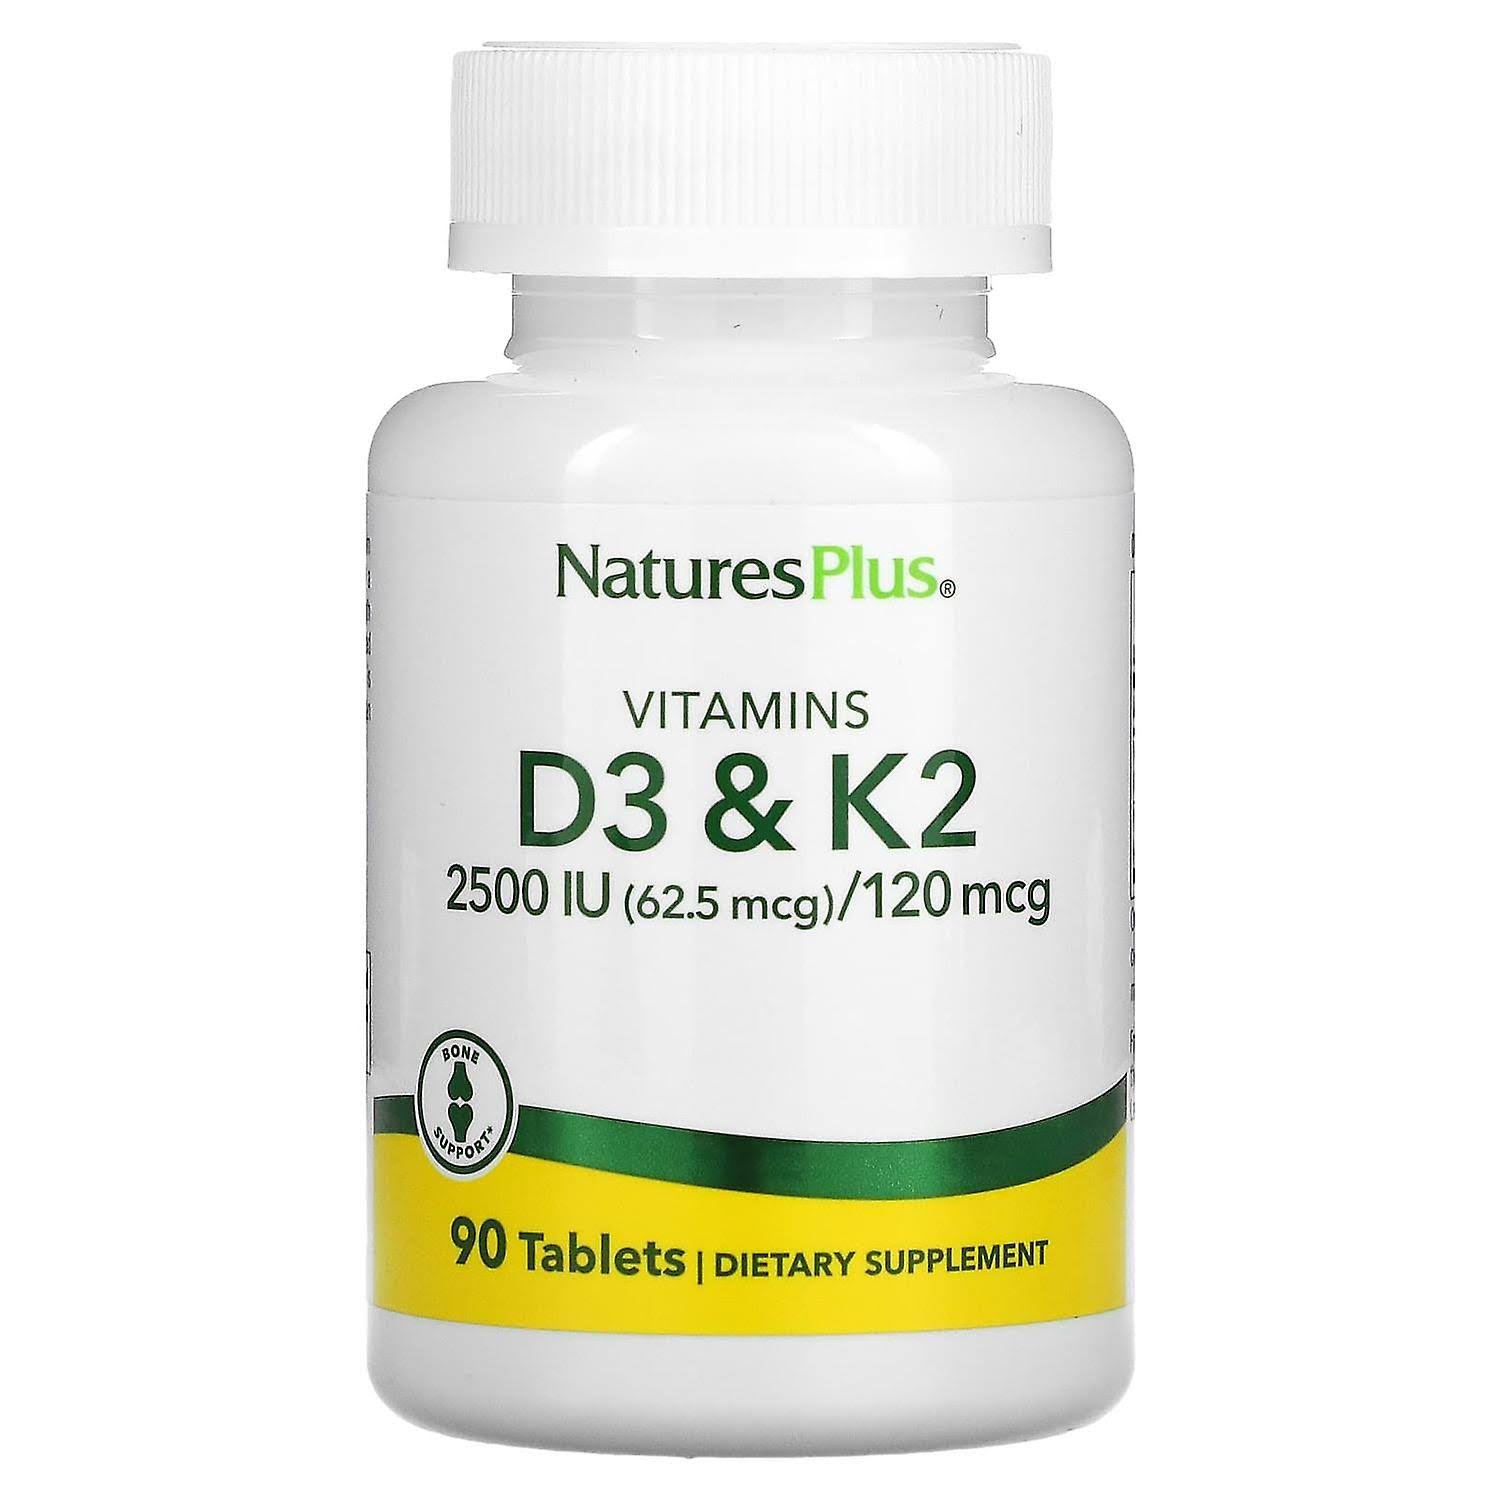 NaturesPlus Vitamins D3 & K2 90 Tablets